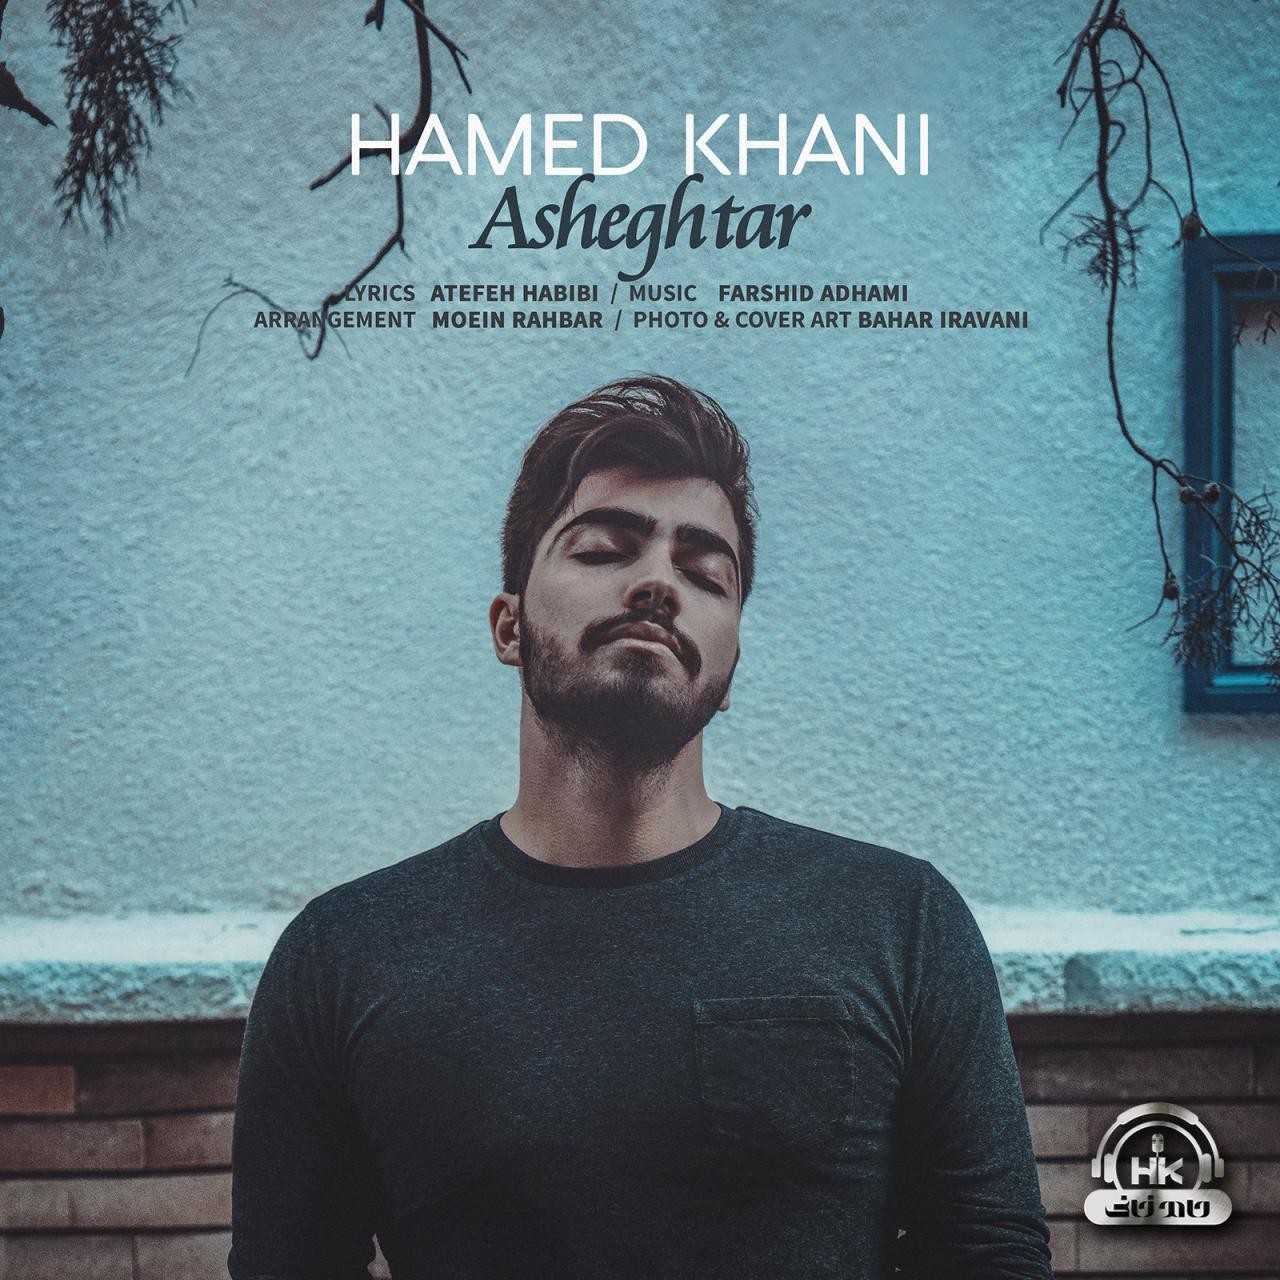  دانلود آهنگ جدید حامد خانی - عاشق تر | Download New Music By Hamed Khani - Asheghtar